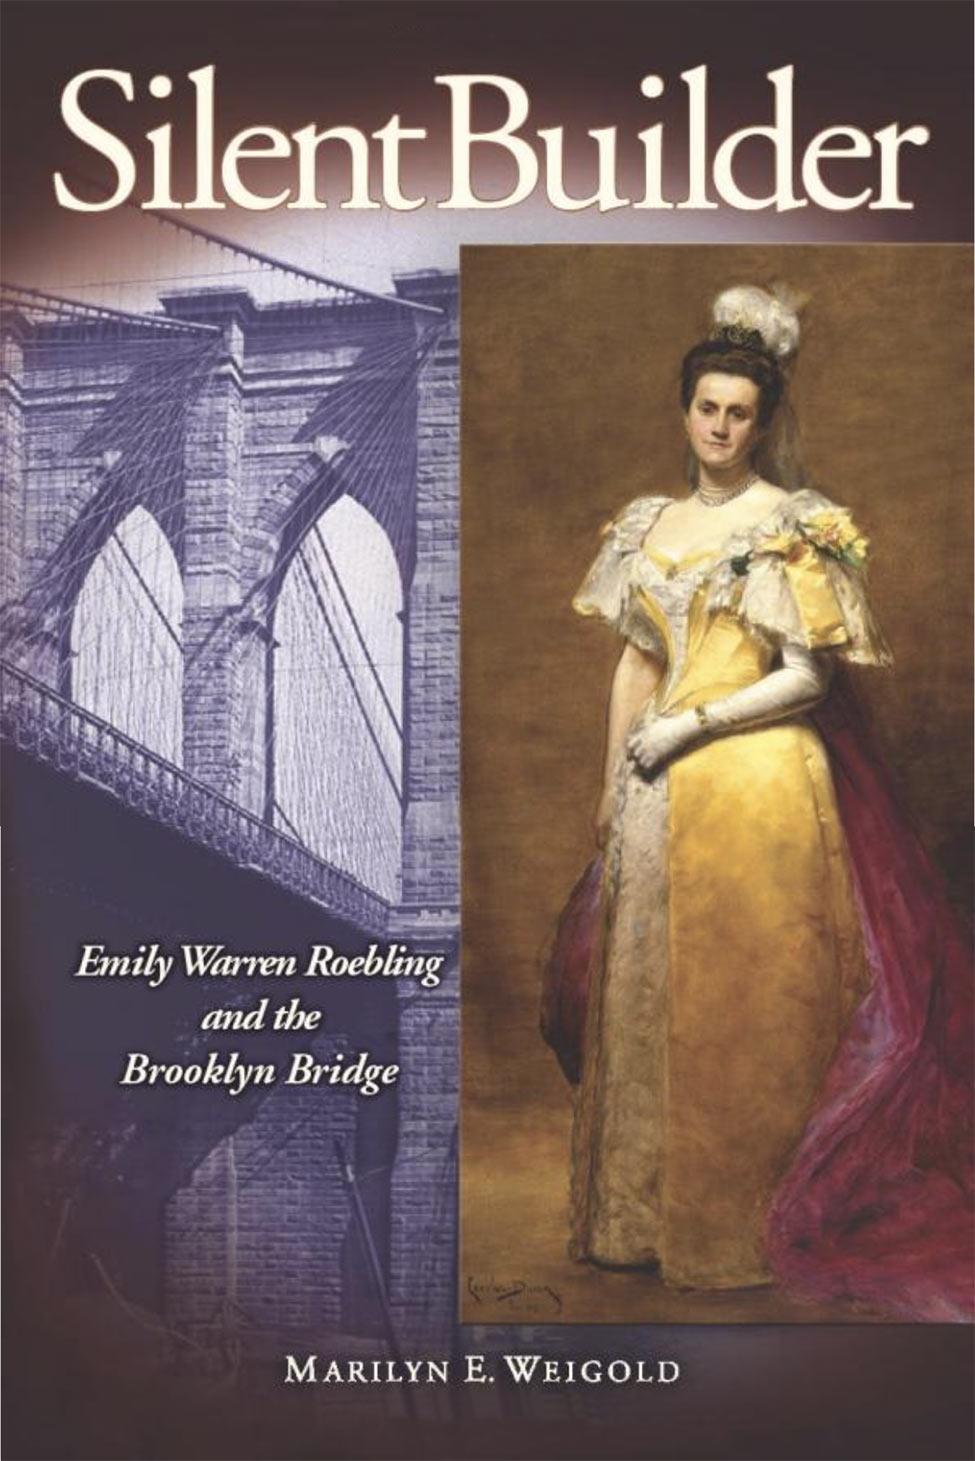 Silent Builder: Emily Warren Roebling And The Brooklyn Bridge by Marilyn Weigold